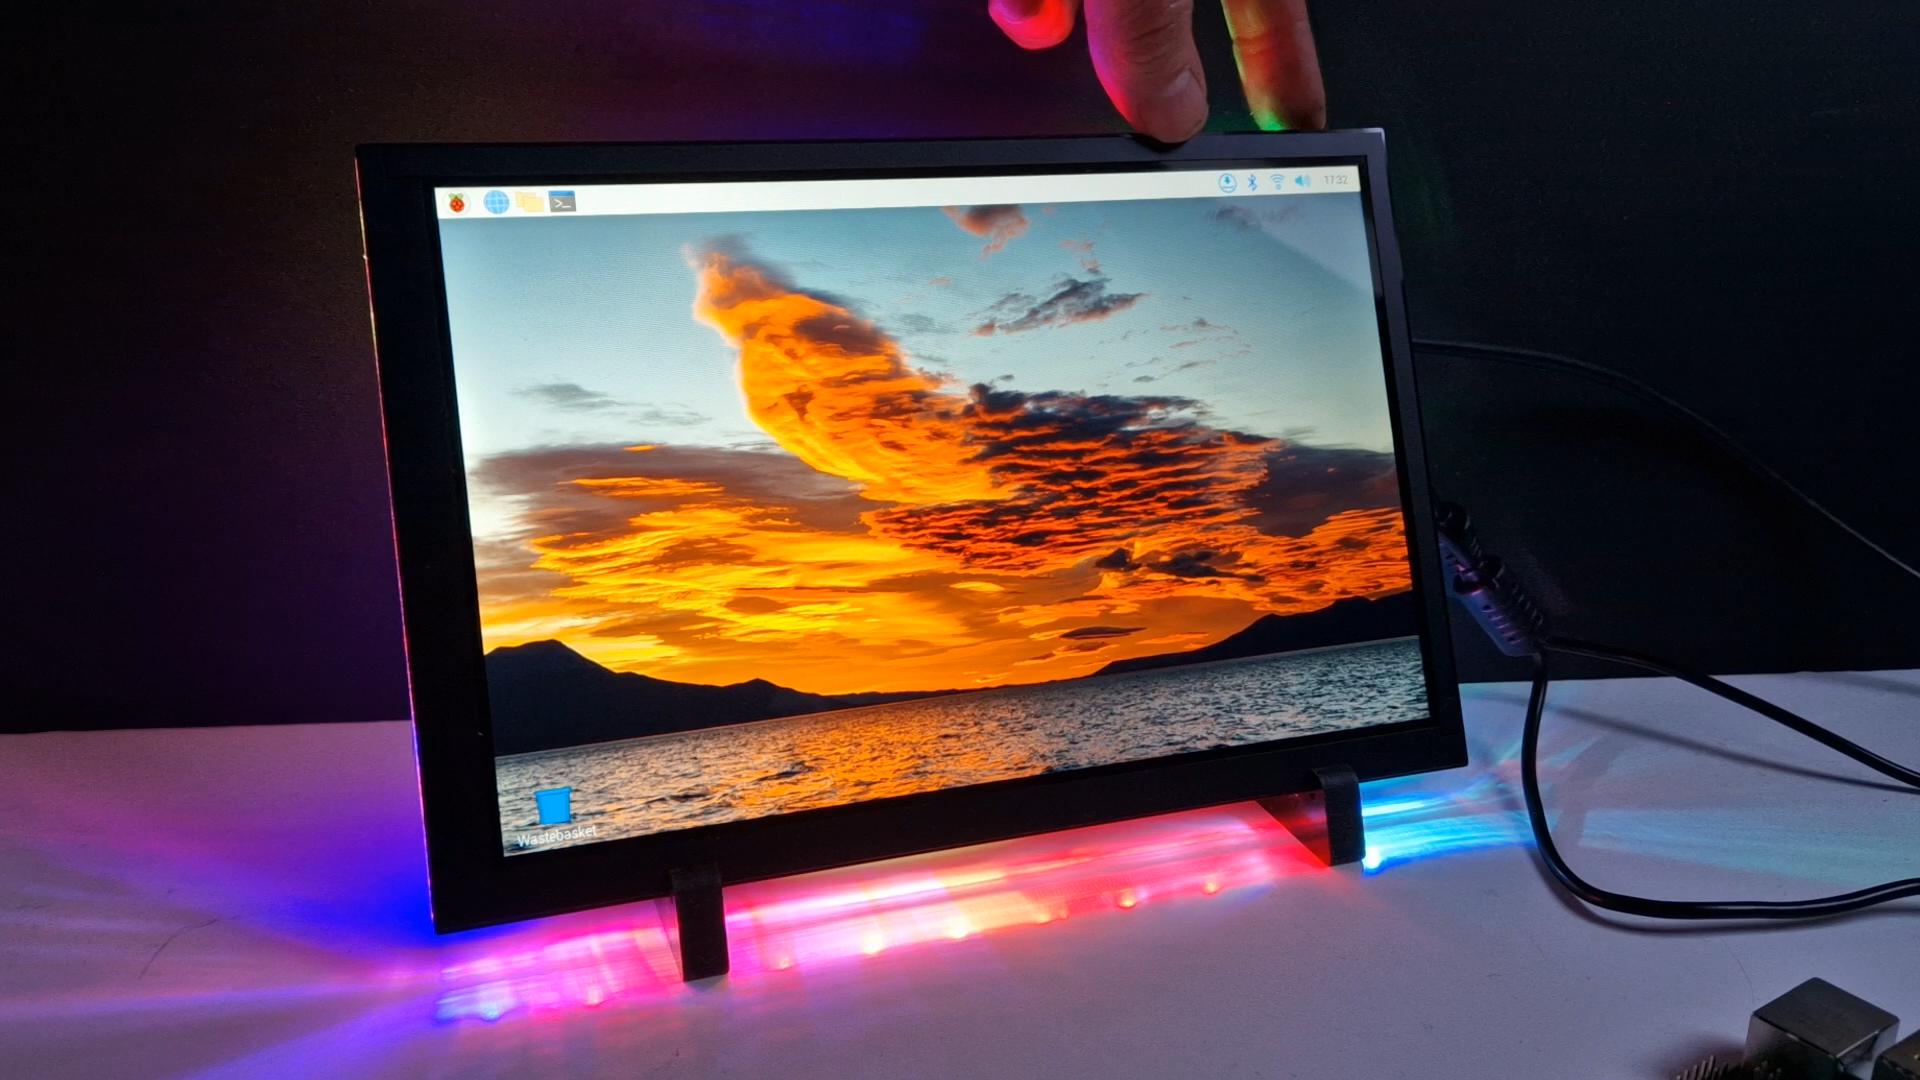 Elecrow Meteor IPS Touchscreen with RGB LEDs